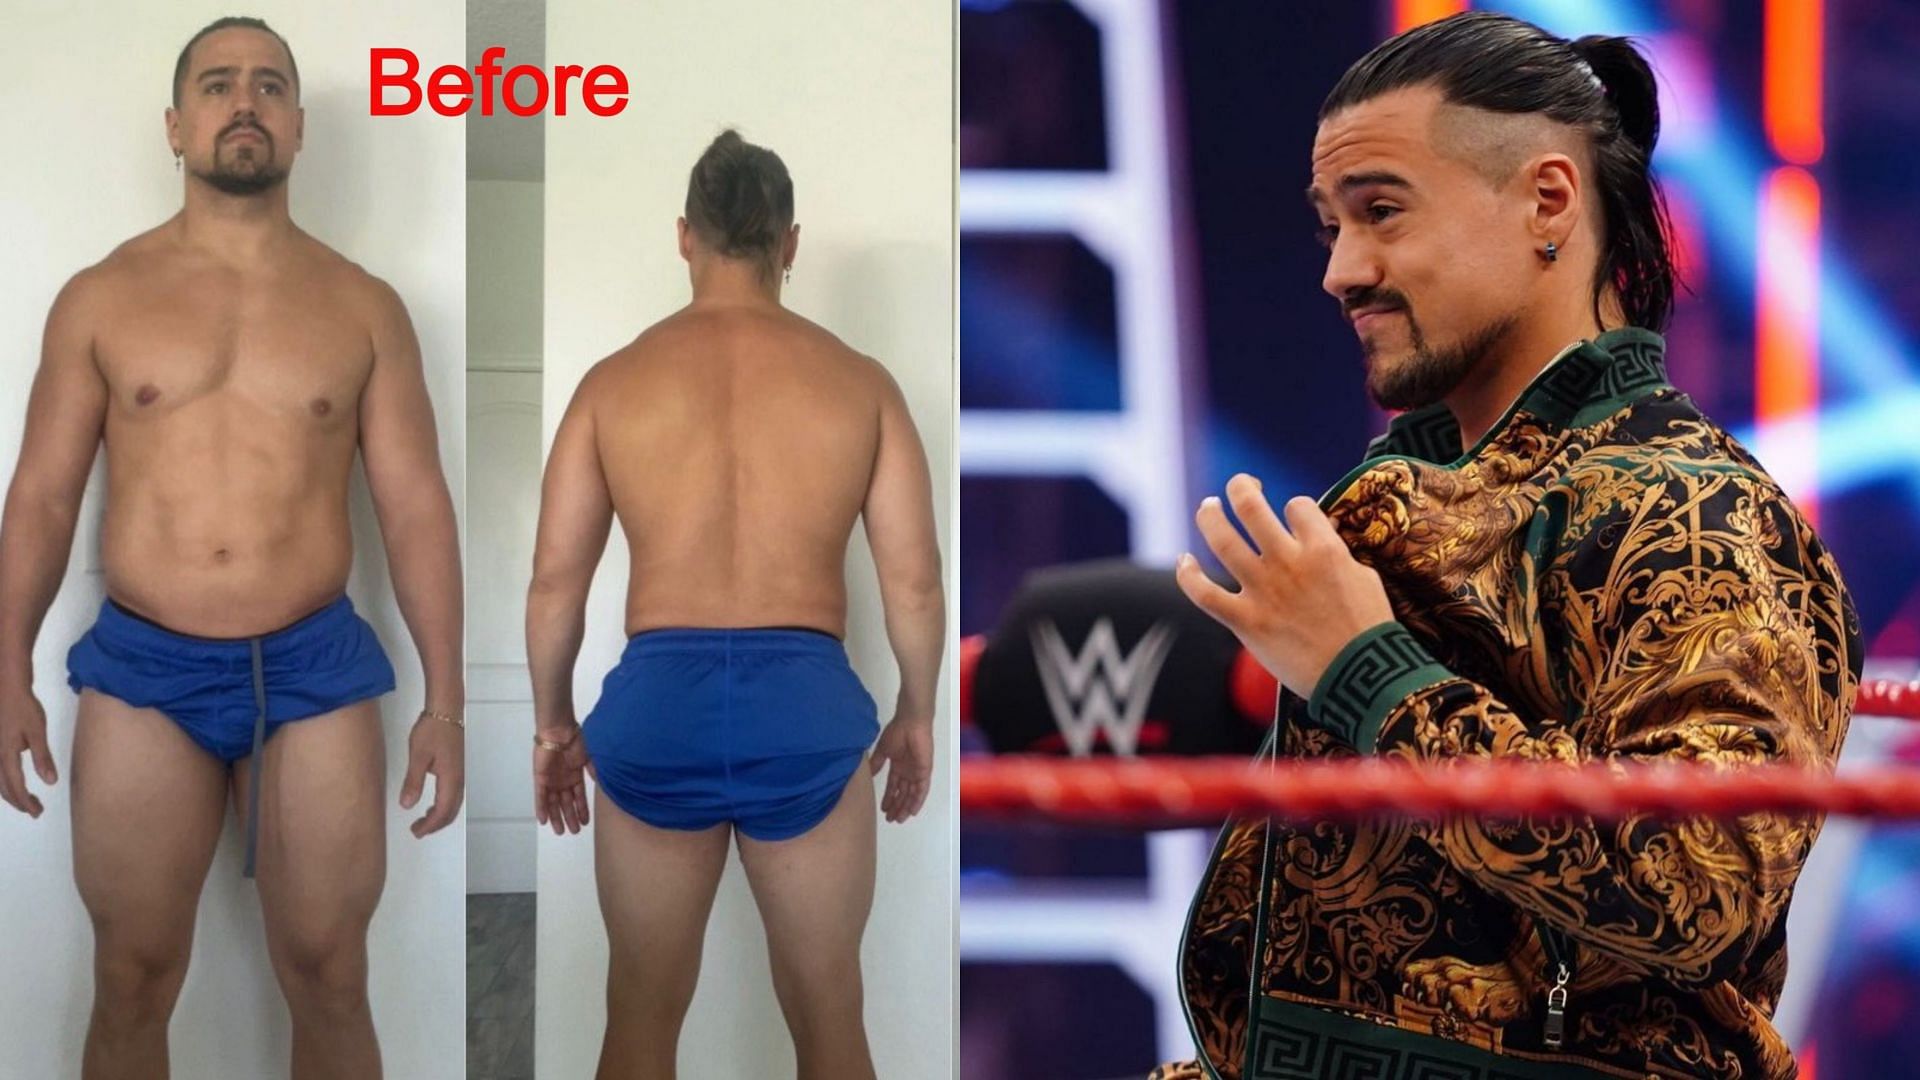 WWE NXT Superstar Angel Garza lost 5 kilograms of his weight